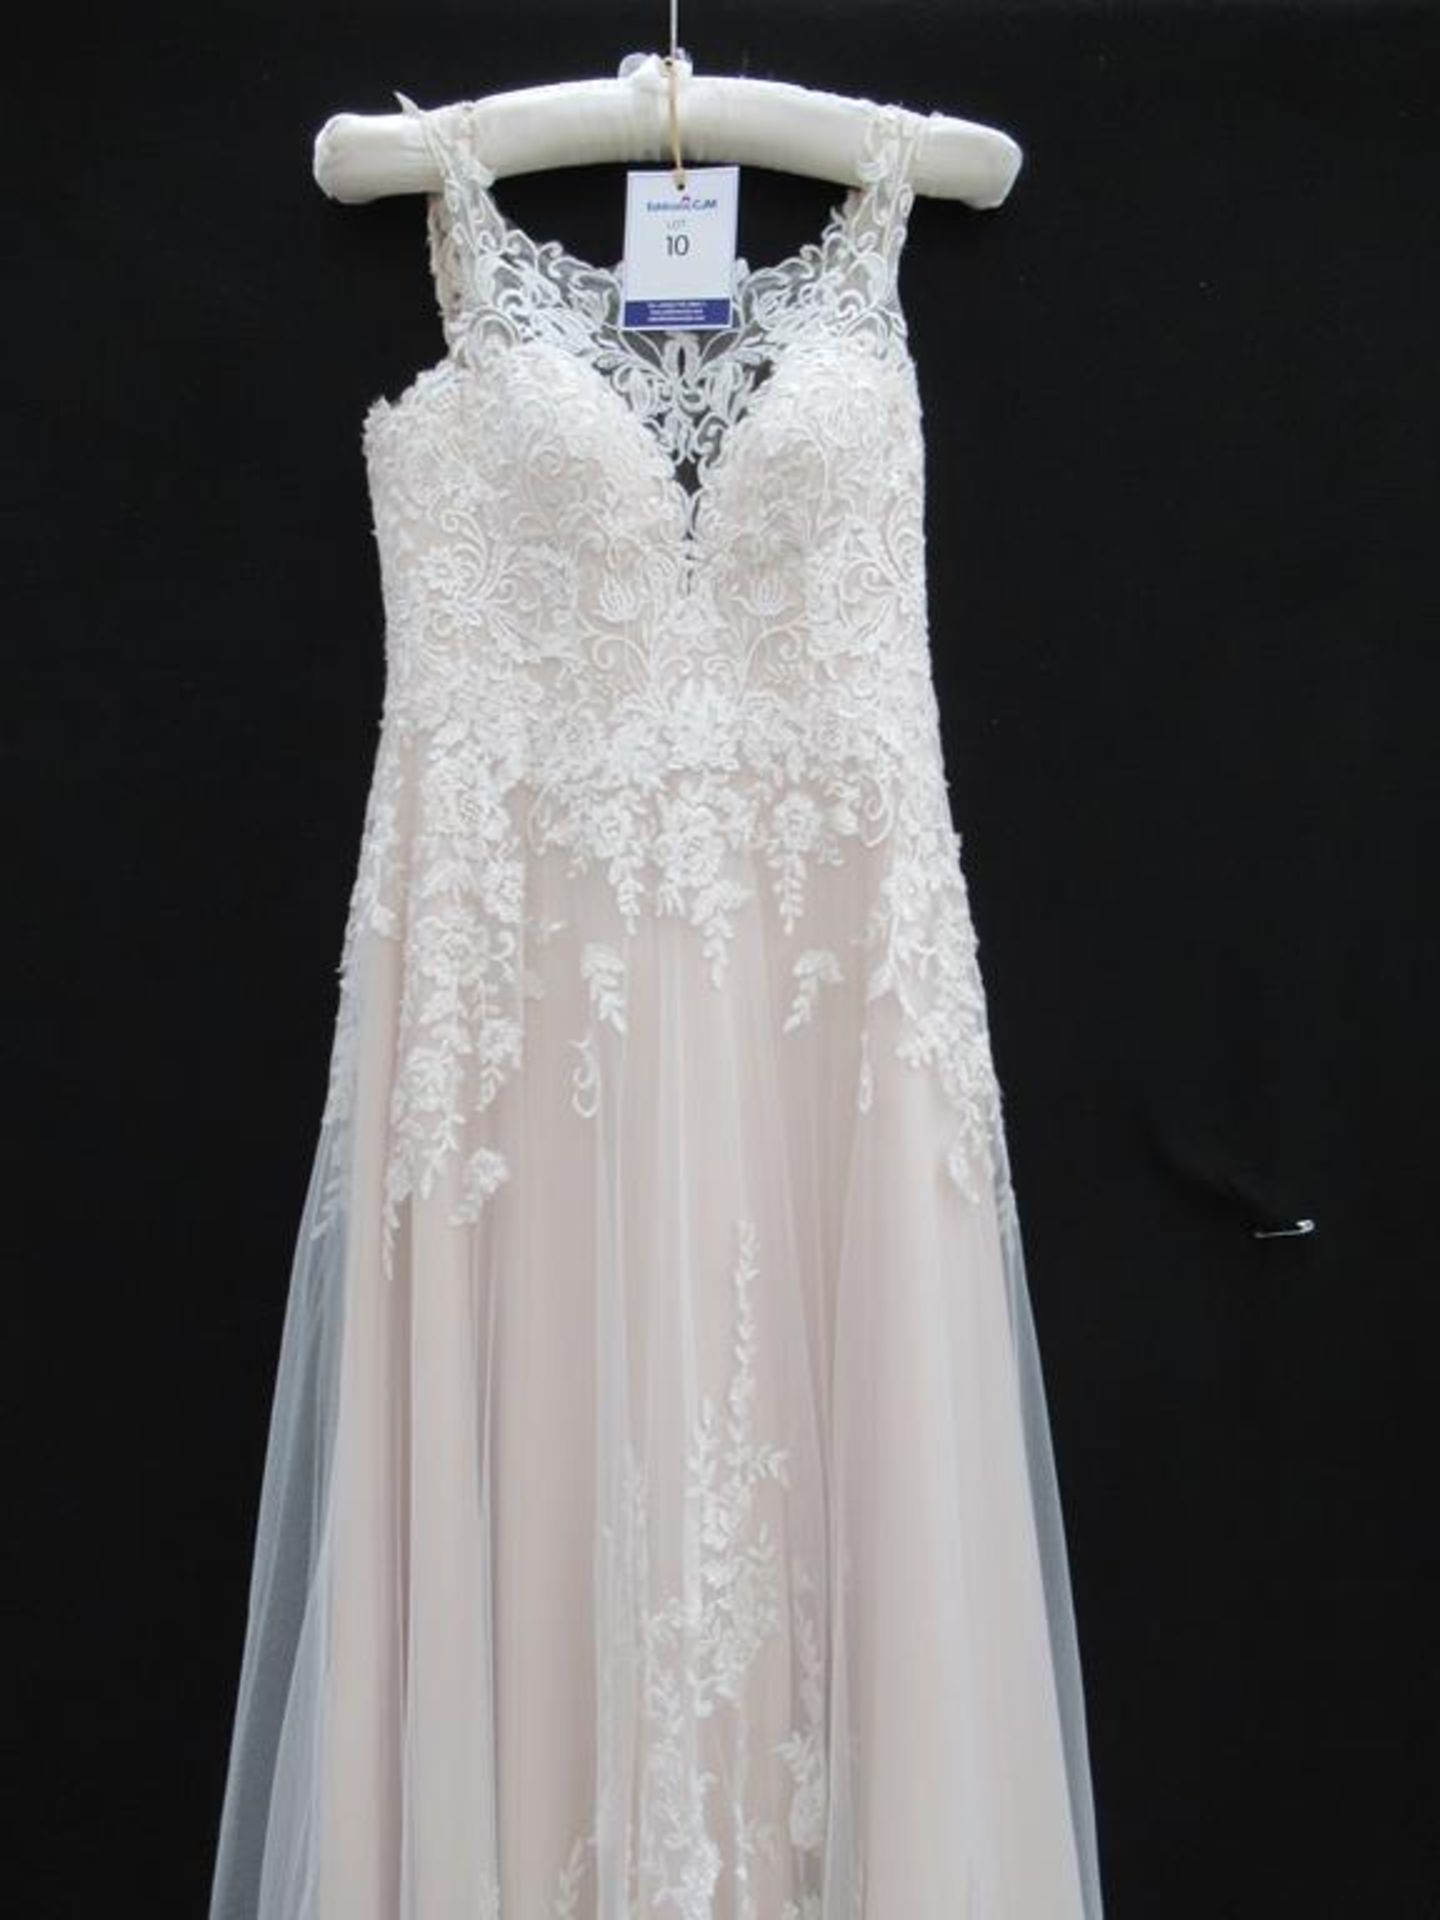 Essense of Australia wedding dress - Image 2 of 3